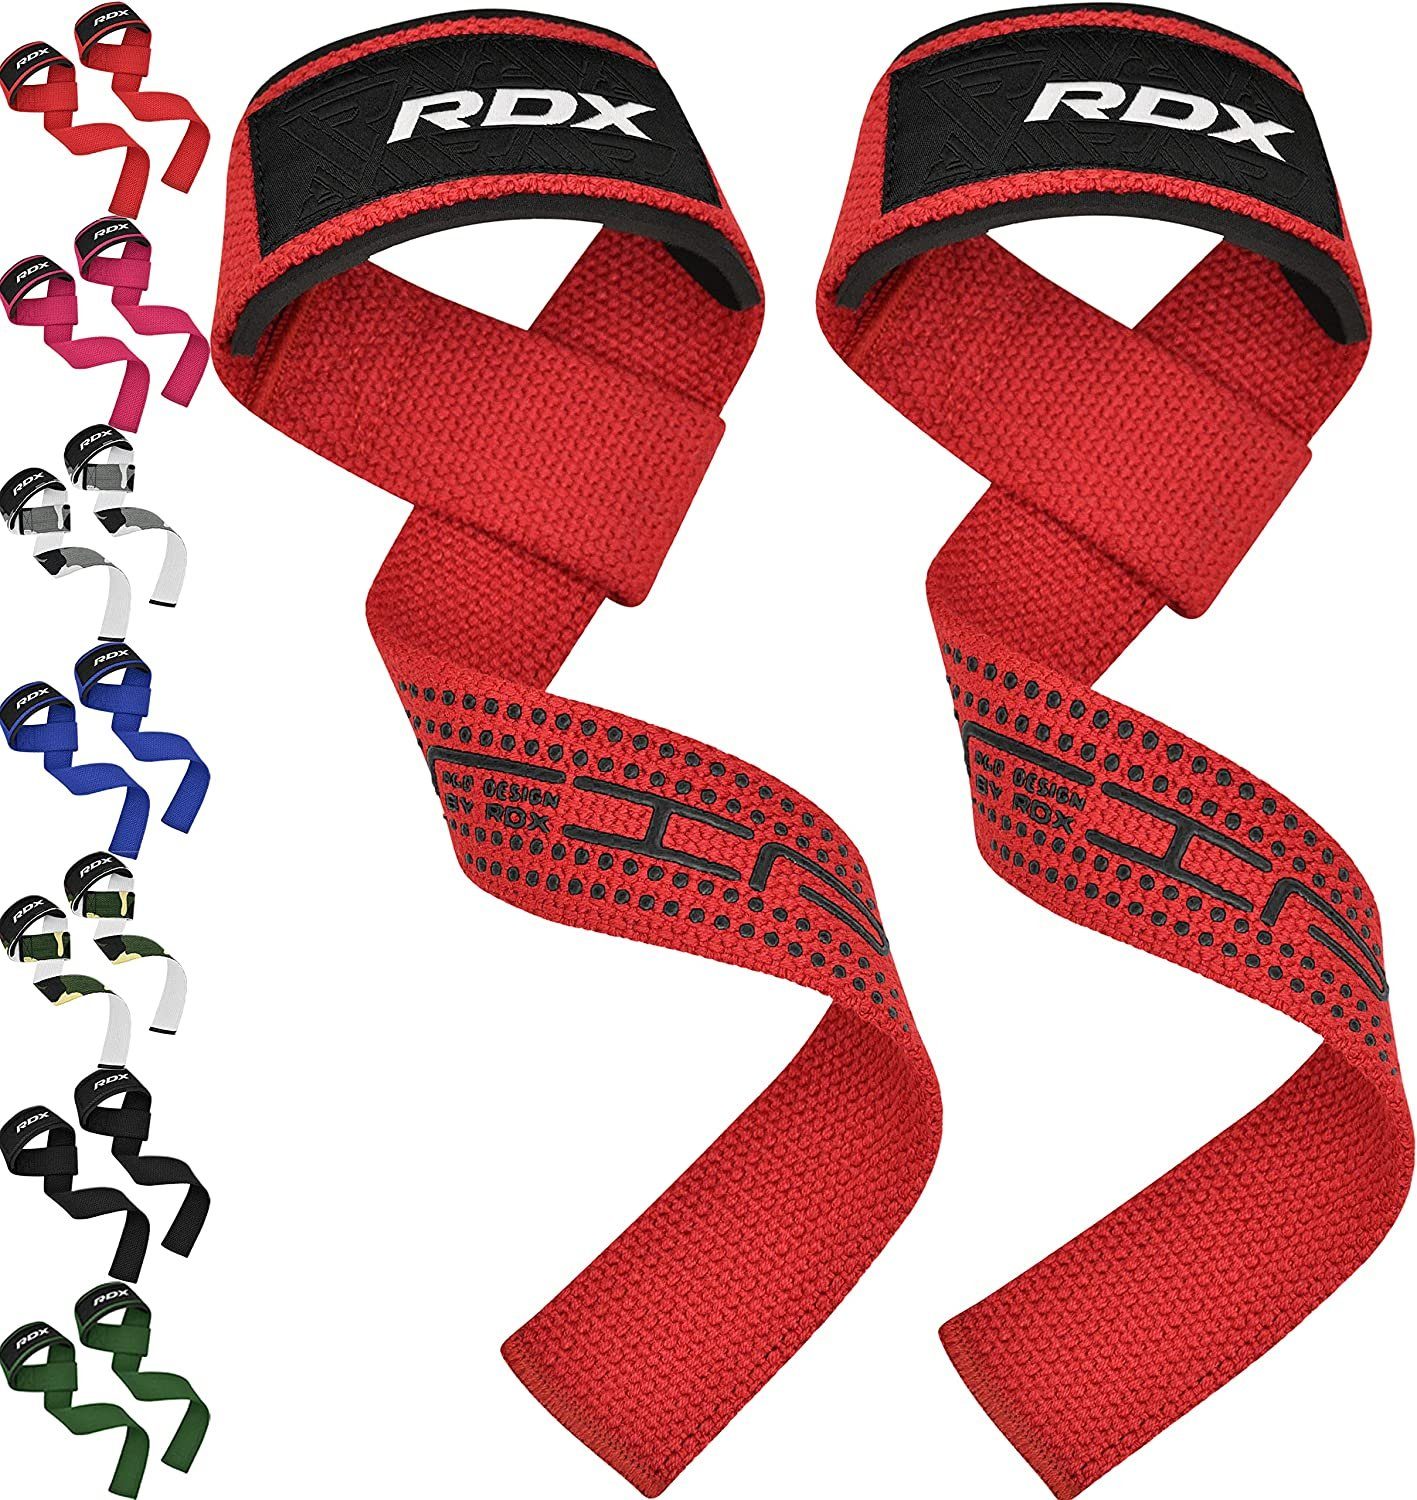 RDX Handgelenkschutz RDX Lifting 60 Red Dotted cm Straps Strength lange Training, professionelle